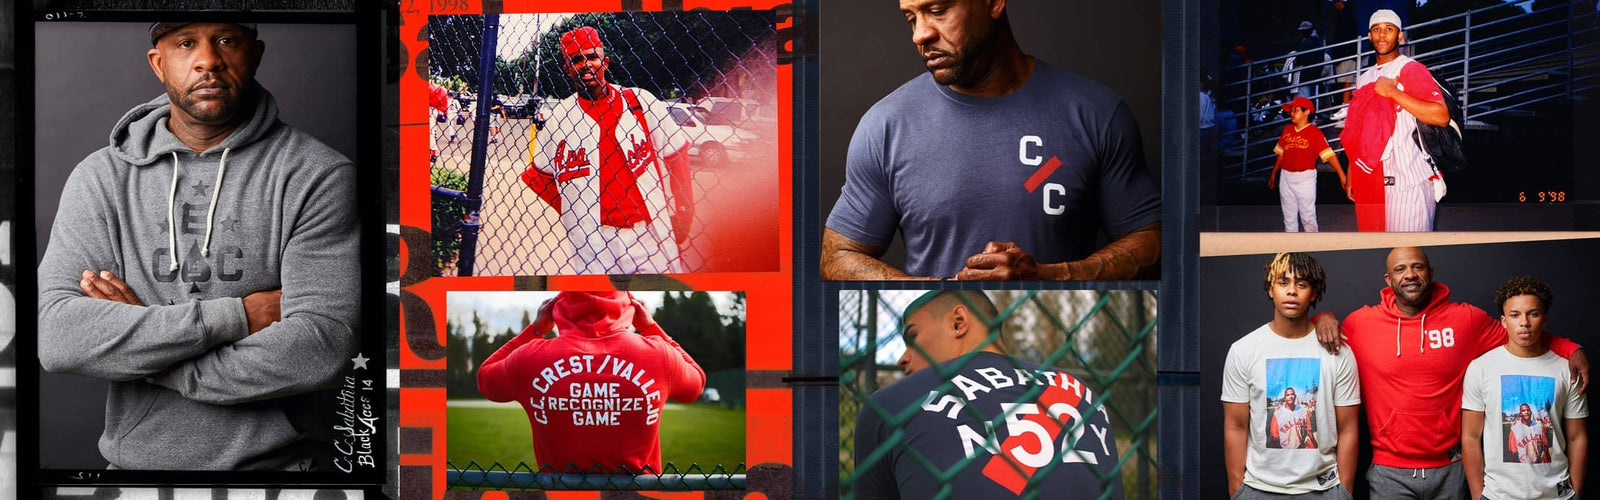 Official CC Sabathia Jersey, CC Sabathia Shirts, Baseball Apparel